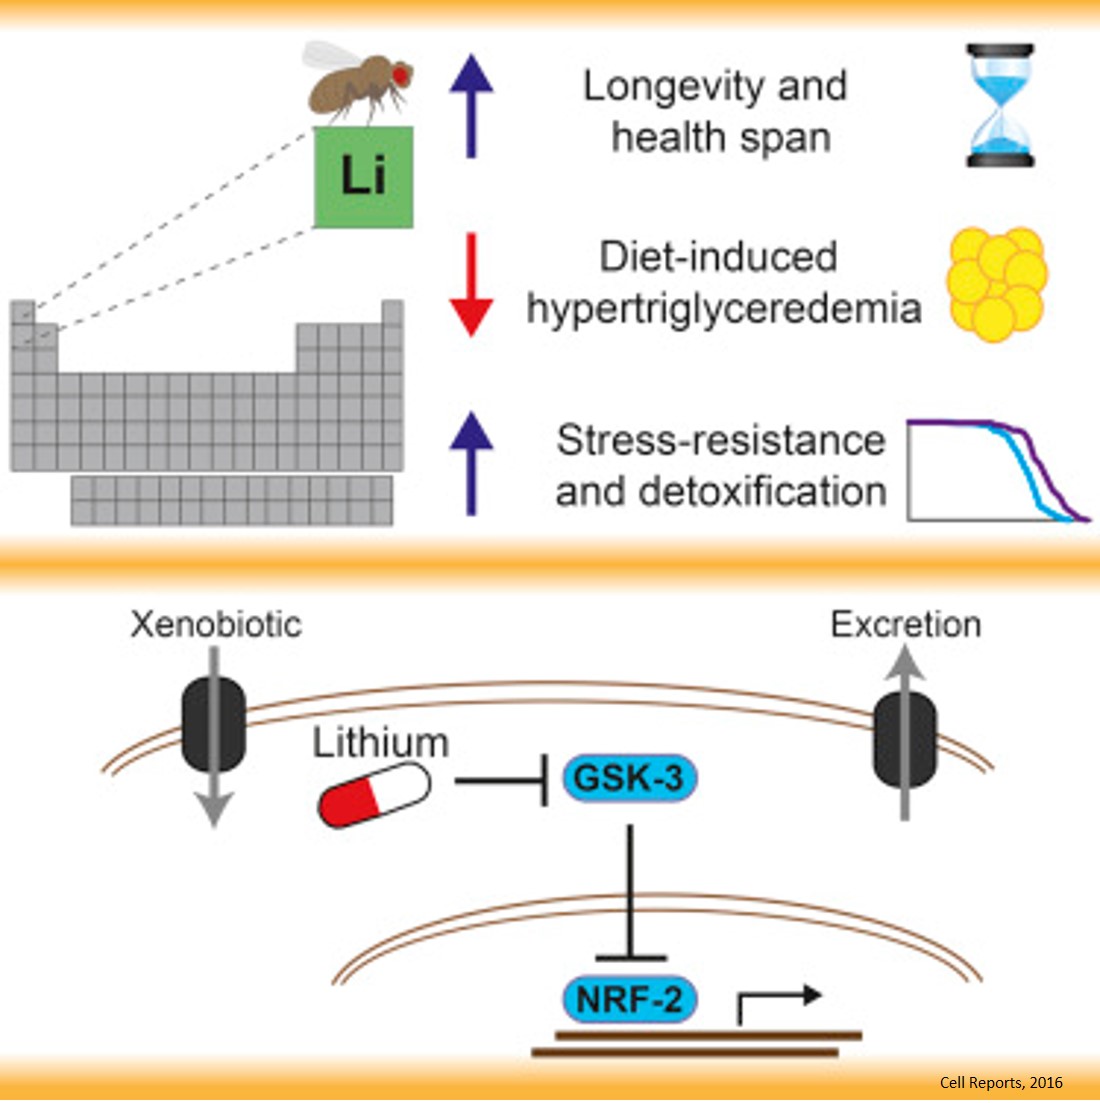 Mood stabilizer, lithium, increases life span in fruit flies